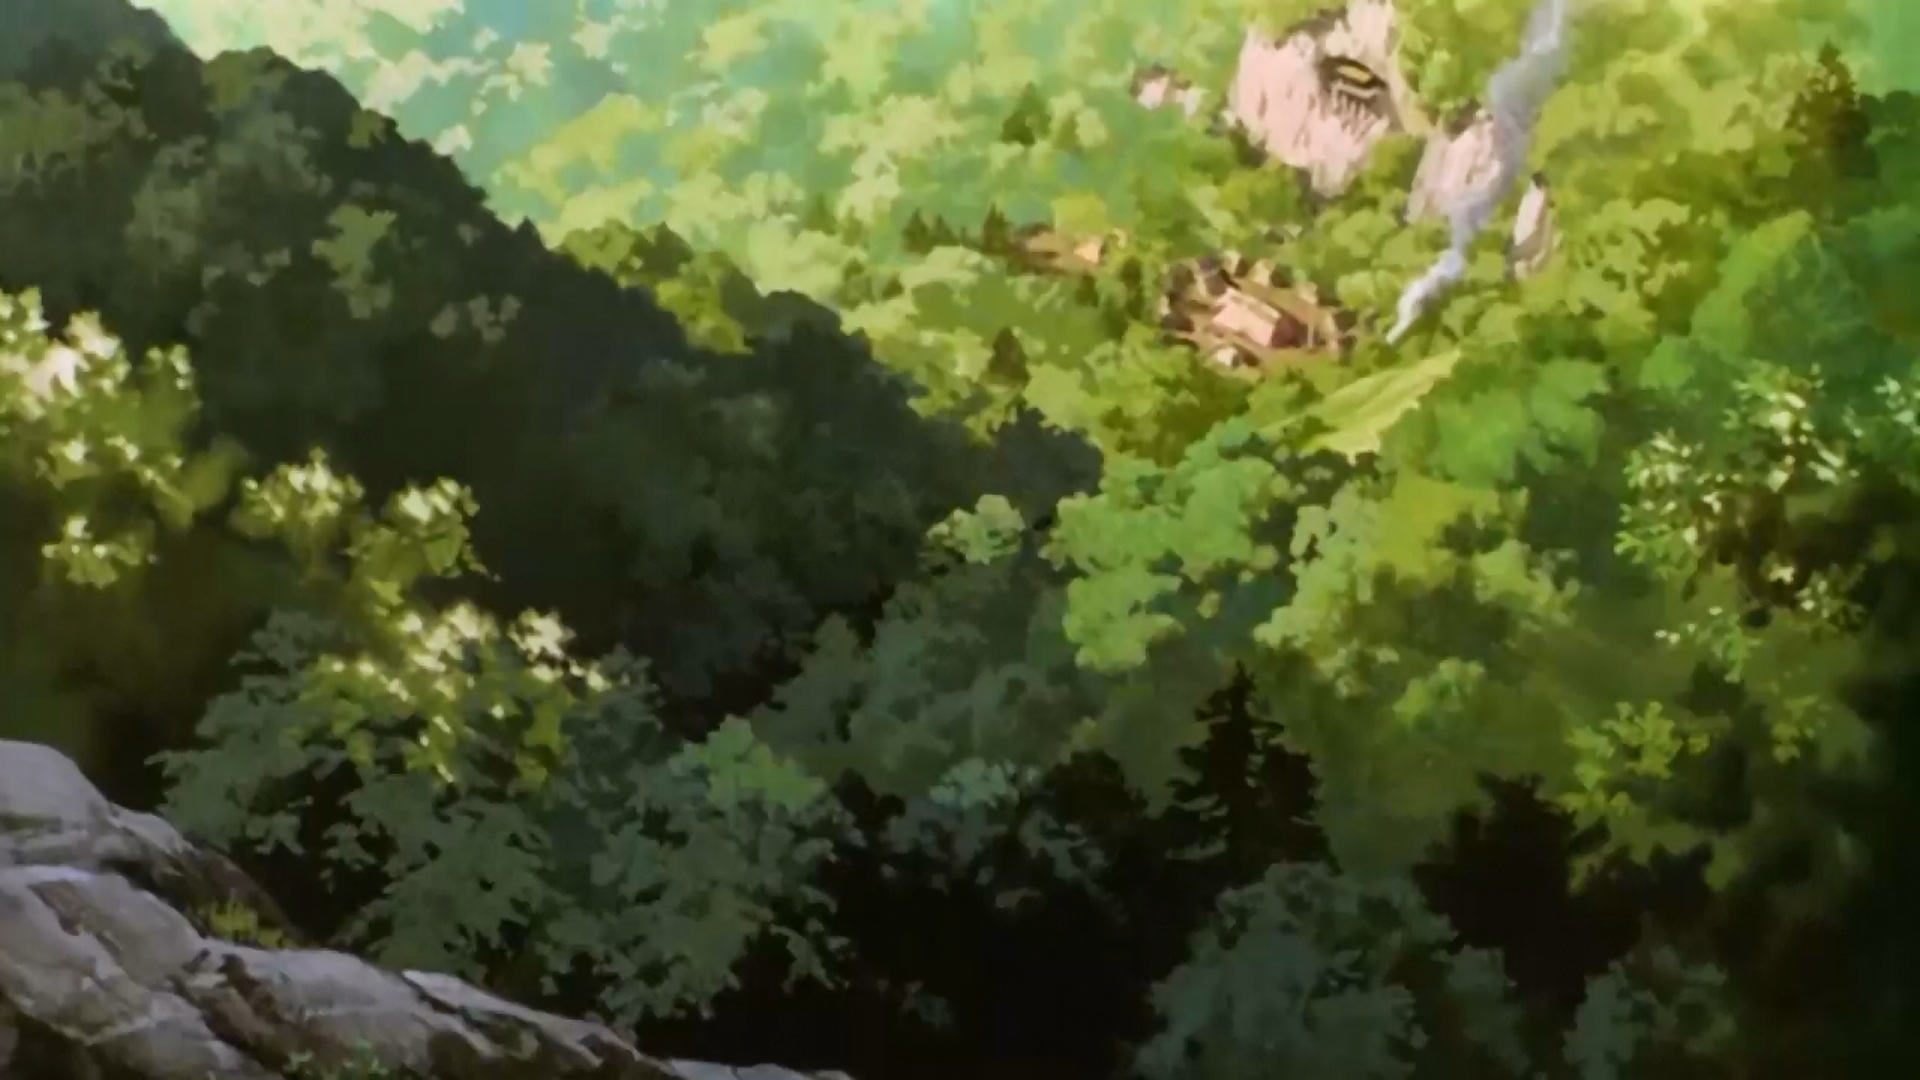 Baixar papel de parede para celular de Anime, Princesa Mononoke gratuito.